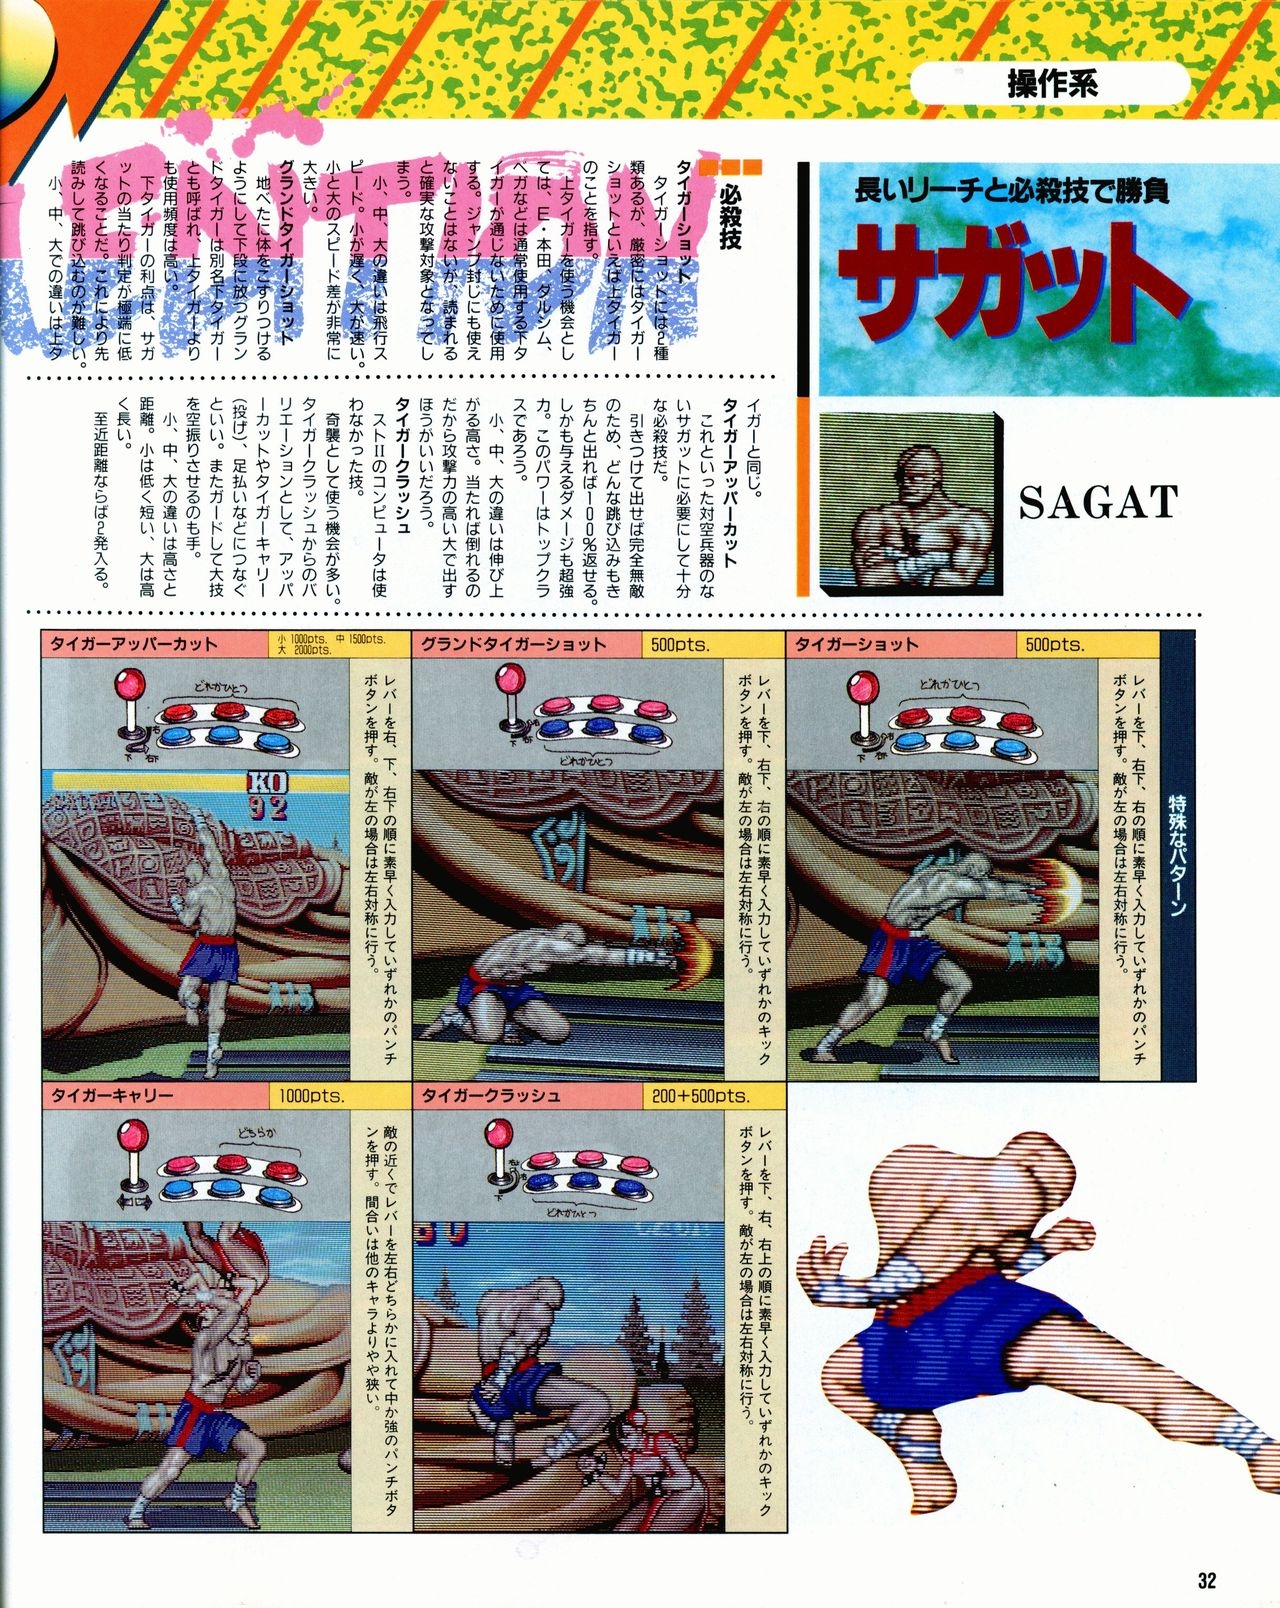 Street Fighter II Dash - Gamest special issue 77 33